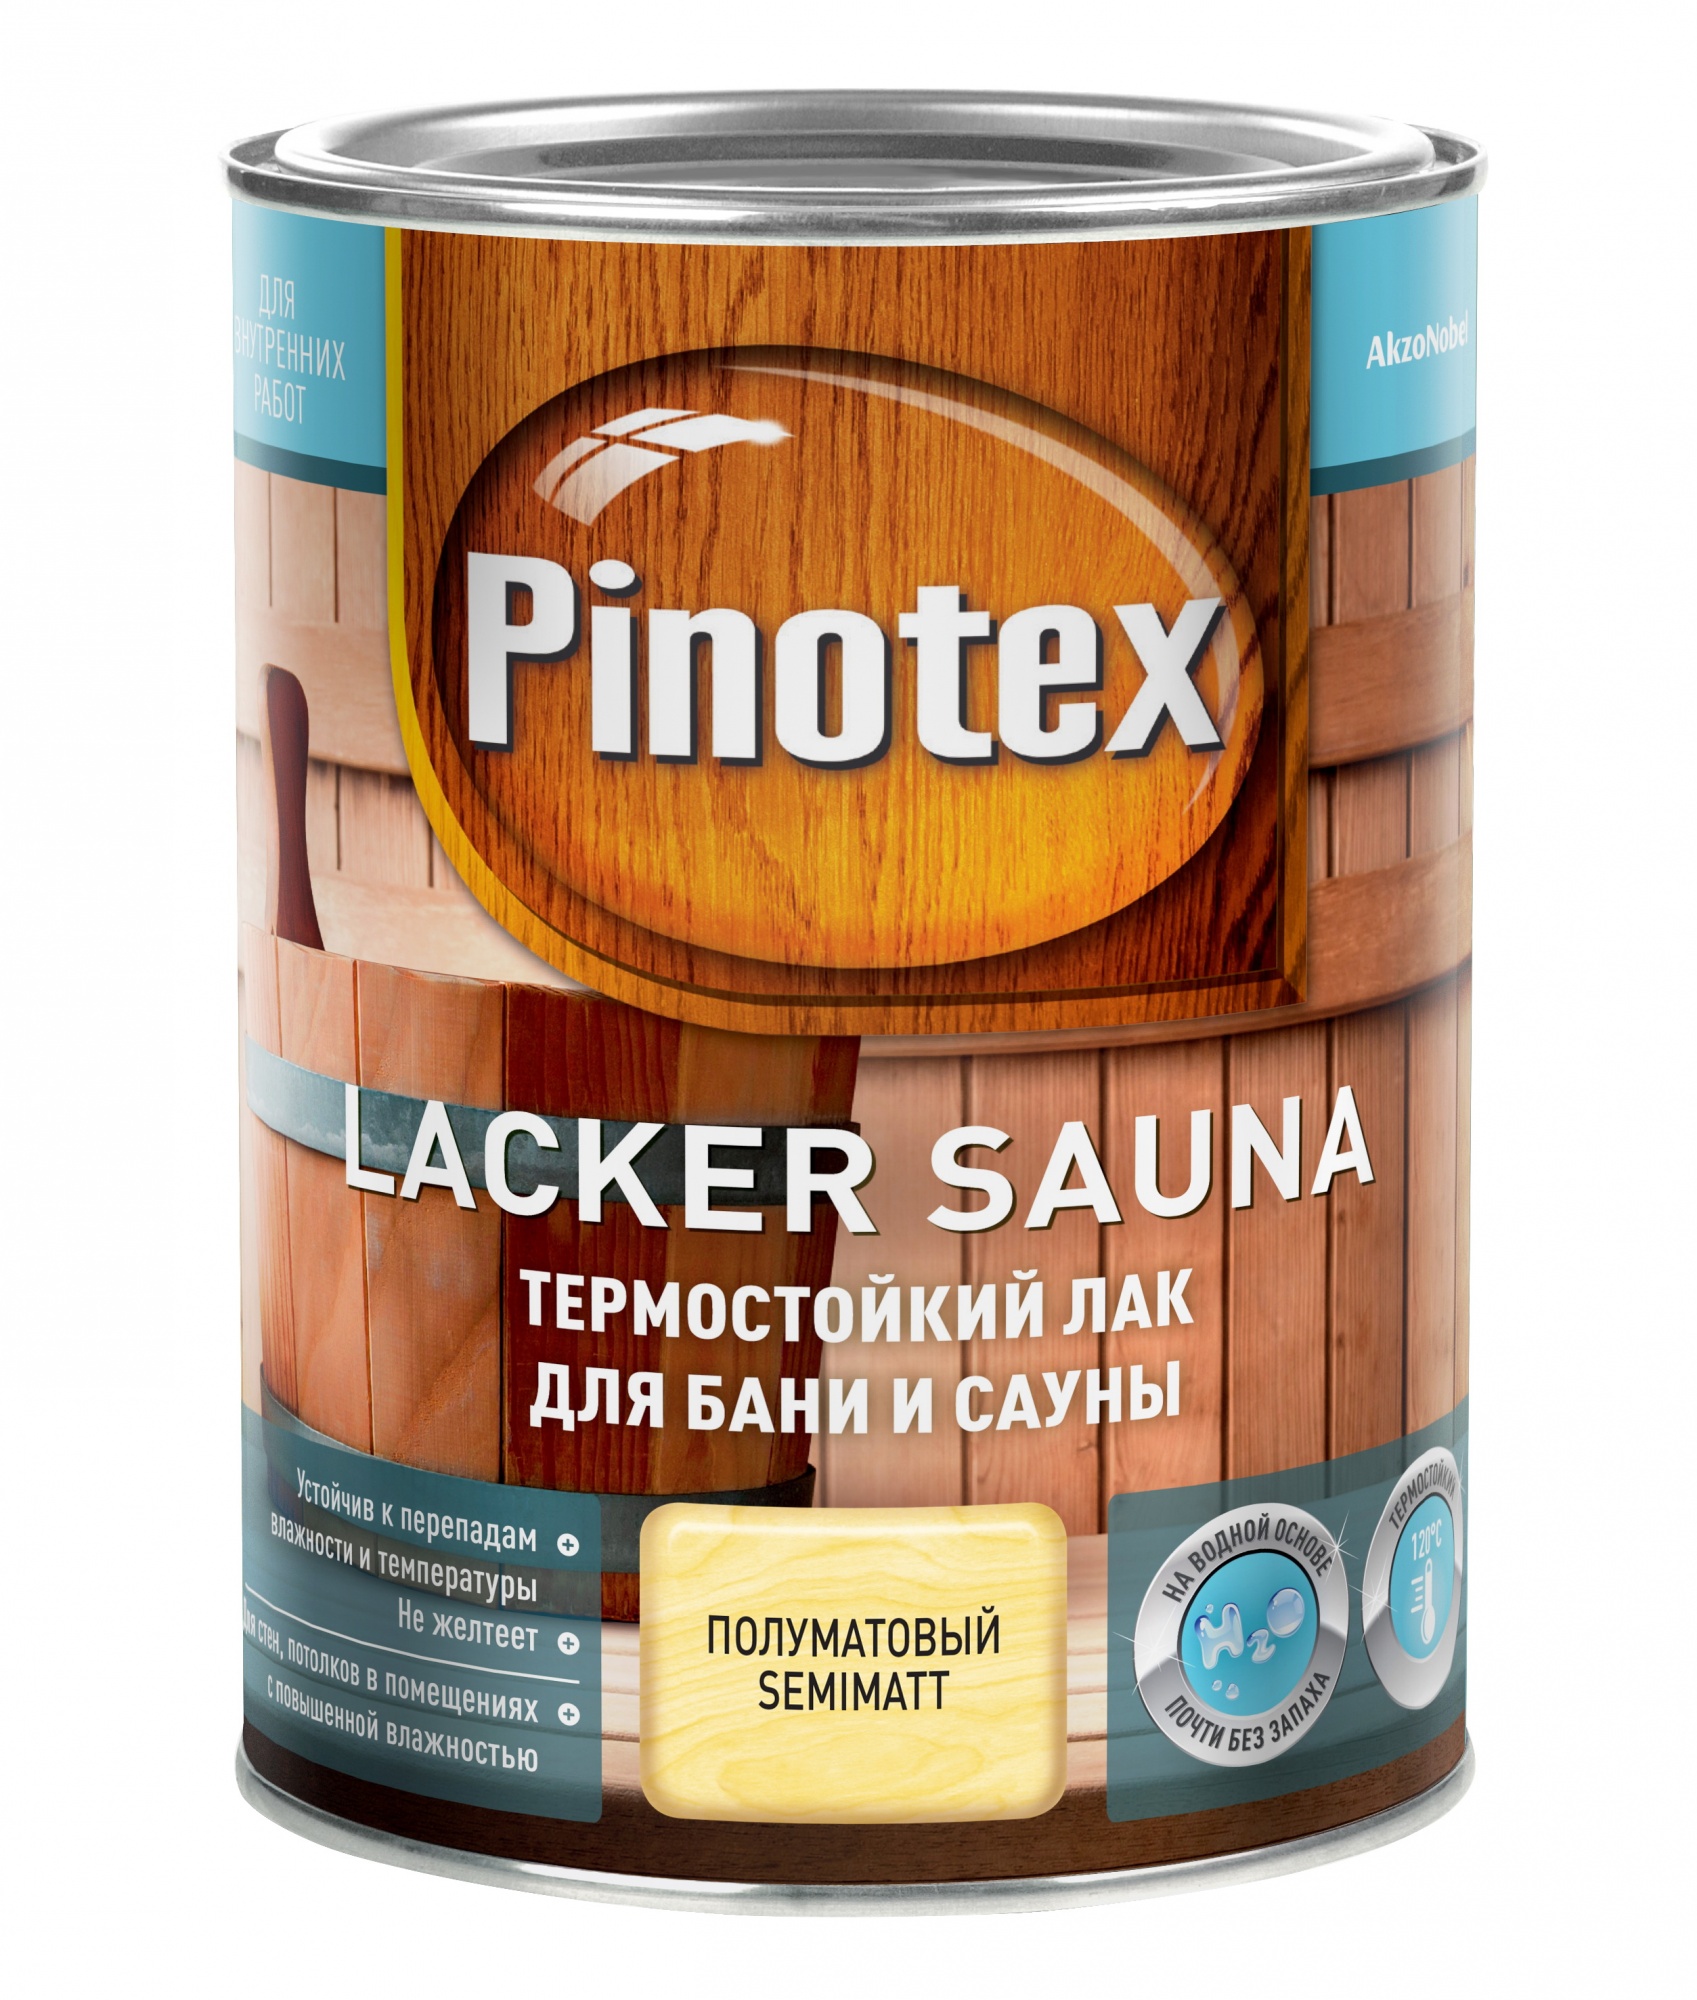 Pinotex Lacker Sauna, 1 л, Лак для дерева термостойкий